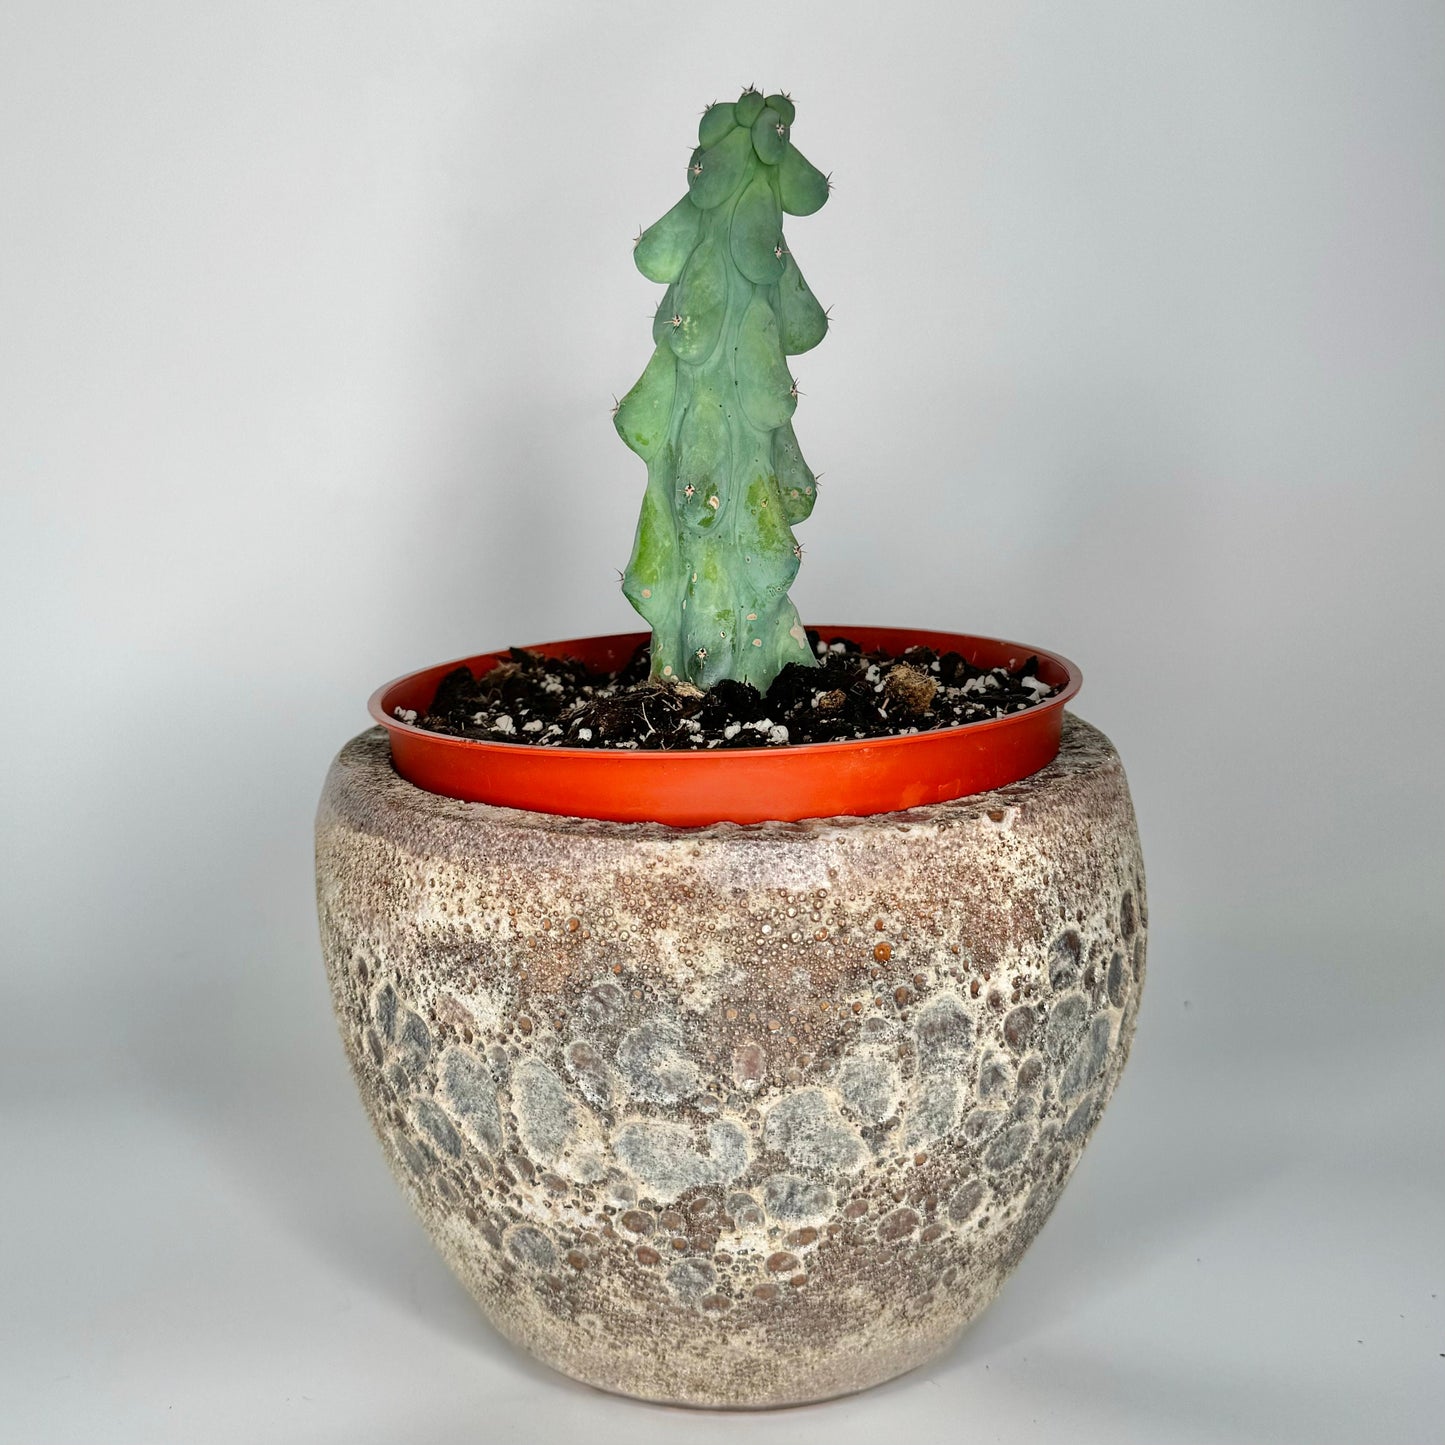 5" Boobie Cactus (Myrtillocactus Geometrizans Fukurokuryuzinboku)